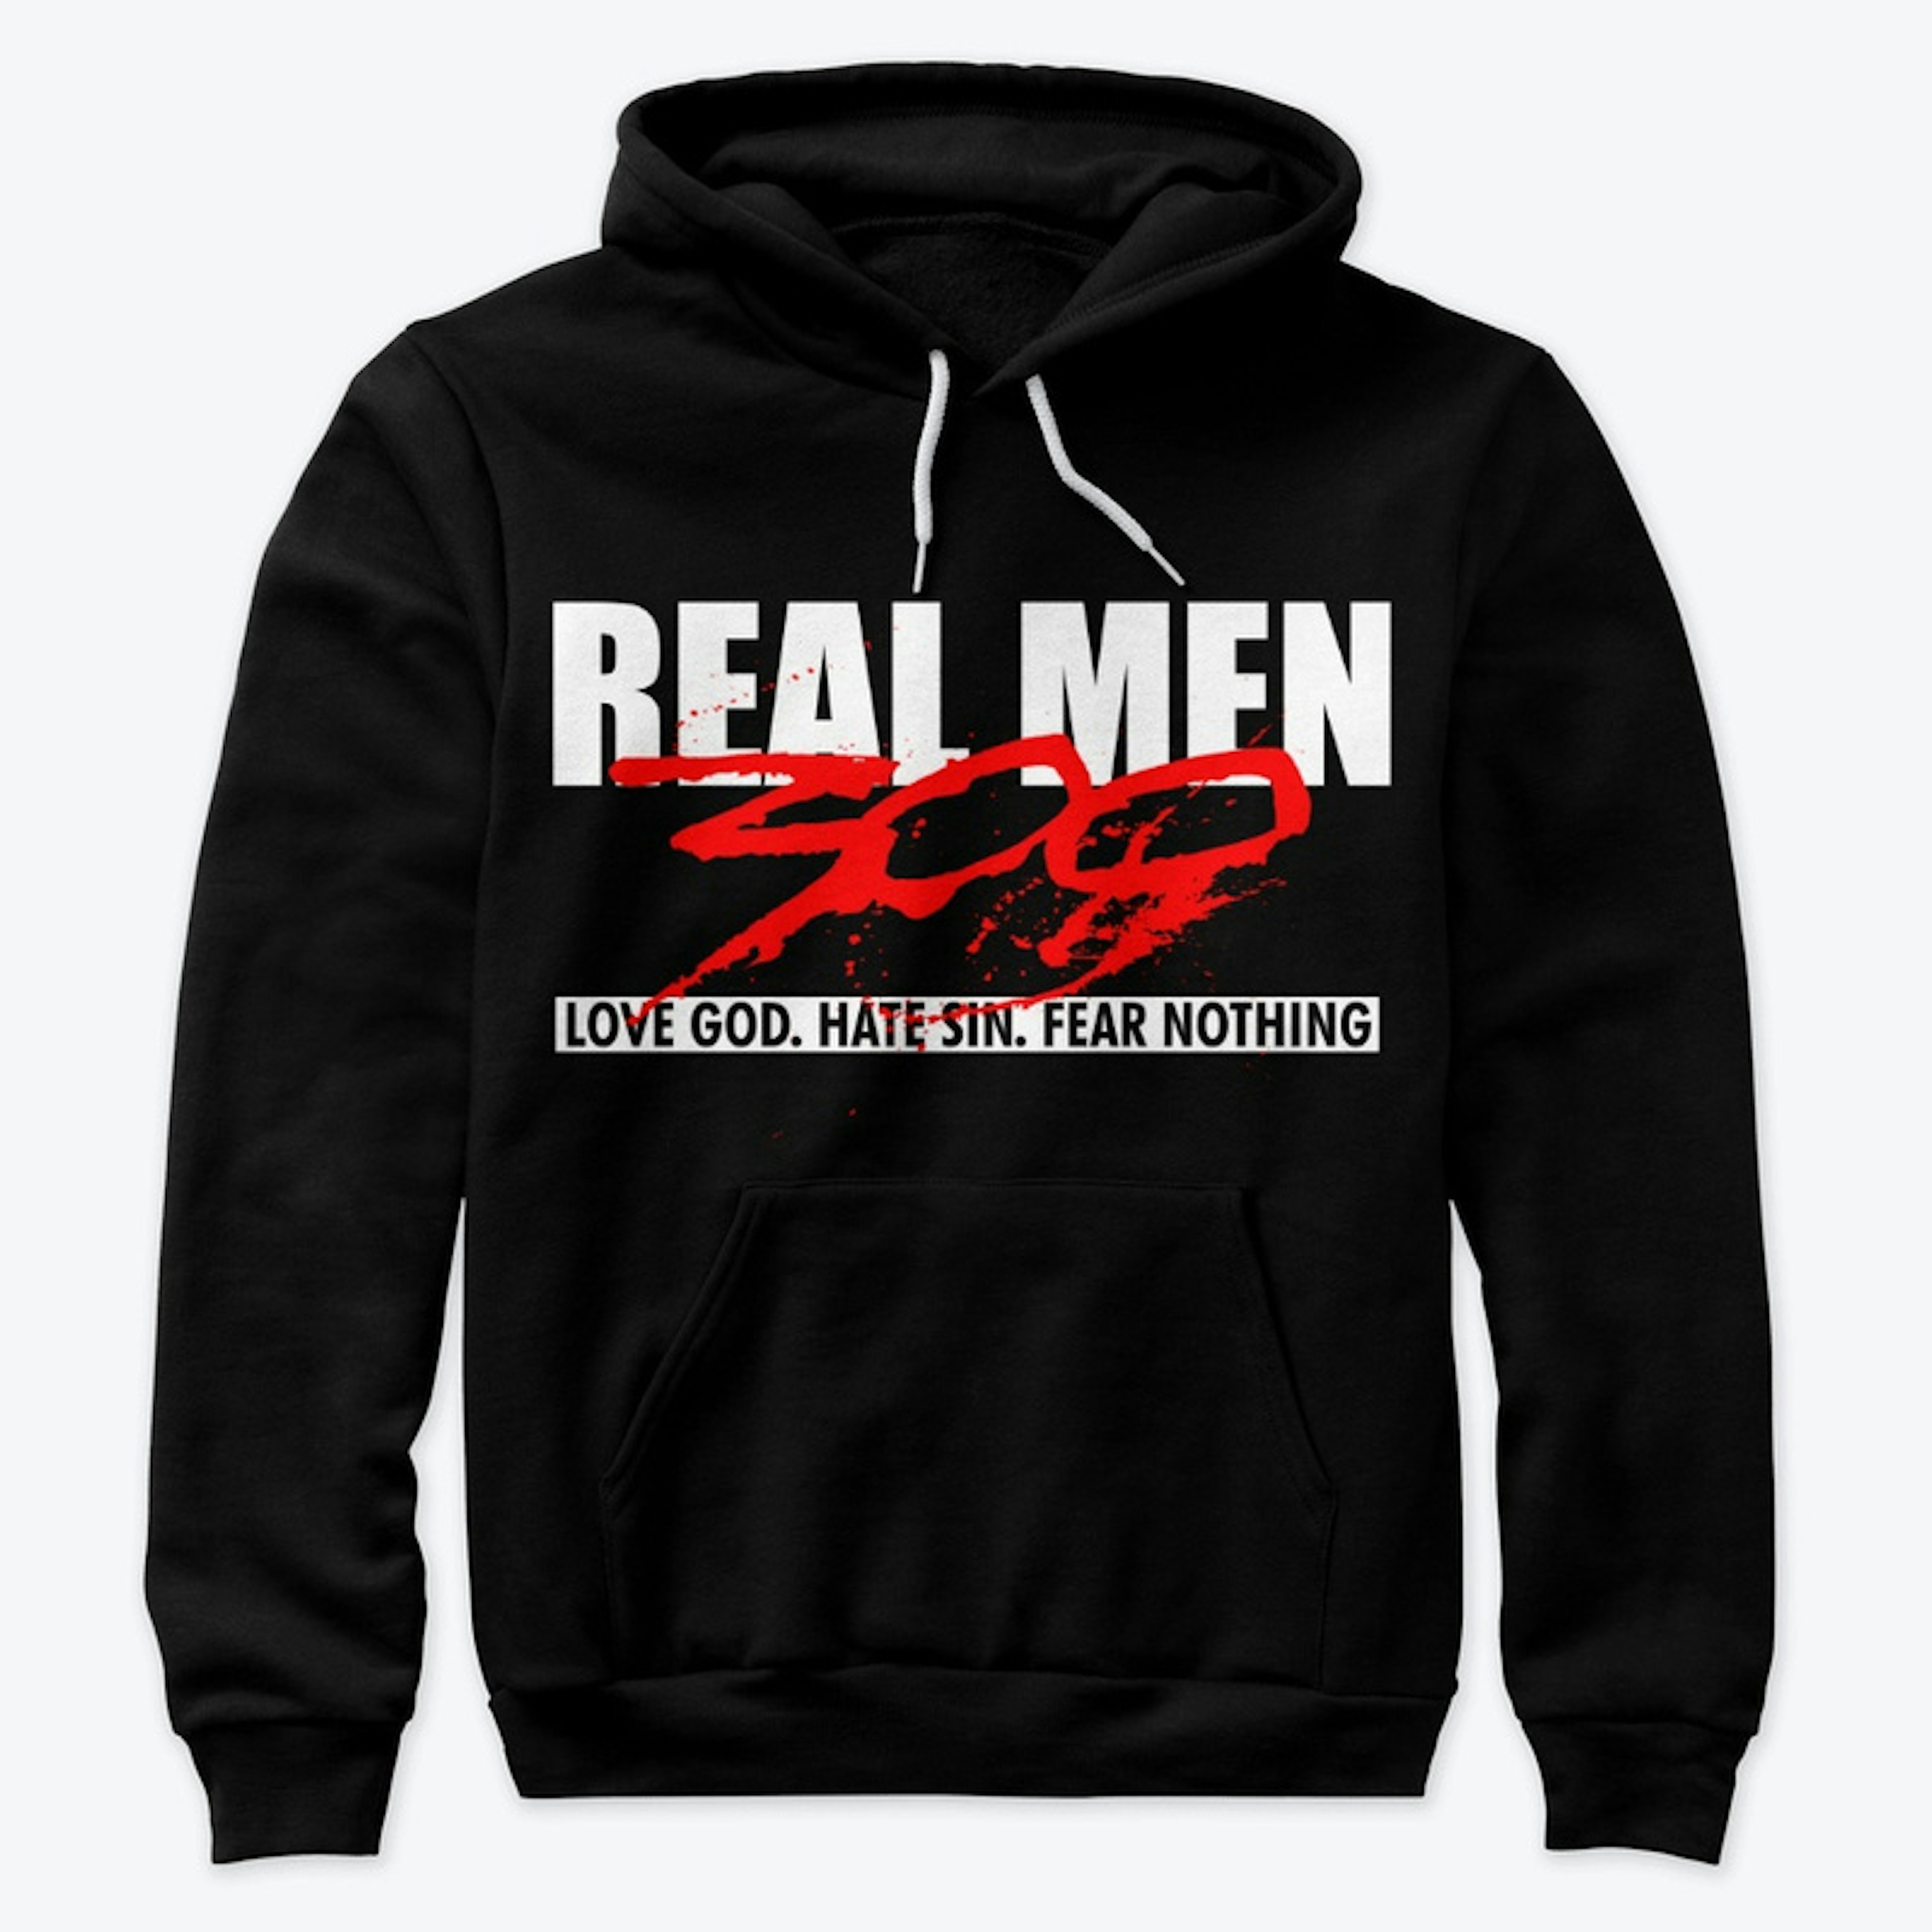 Real Men Gear